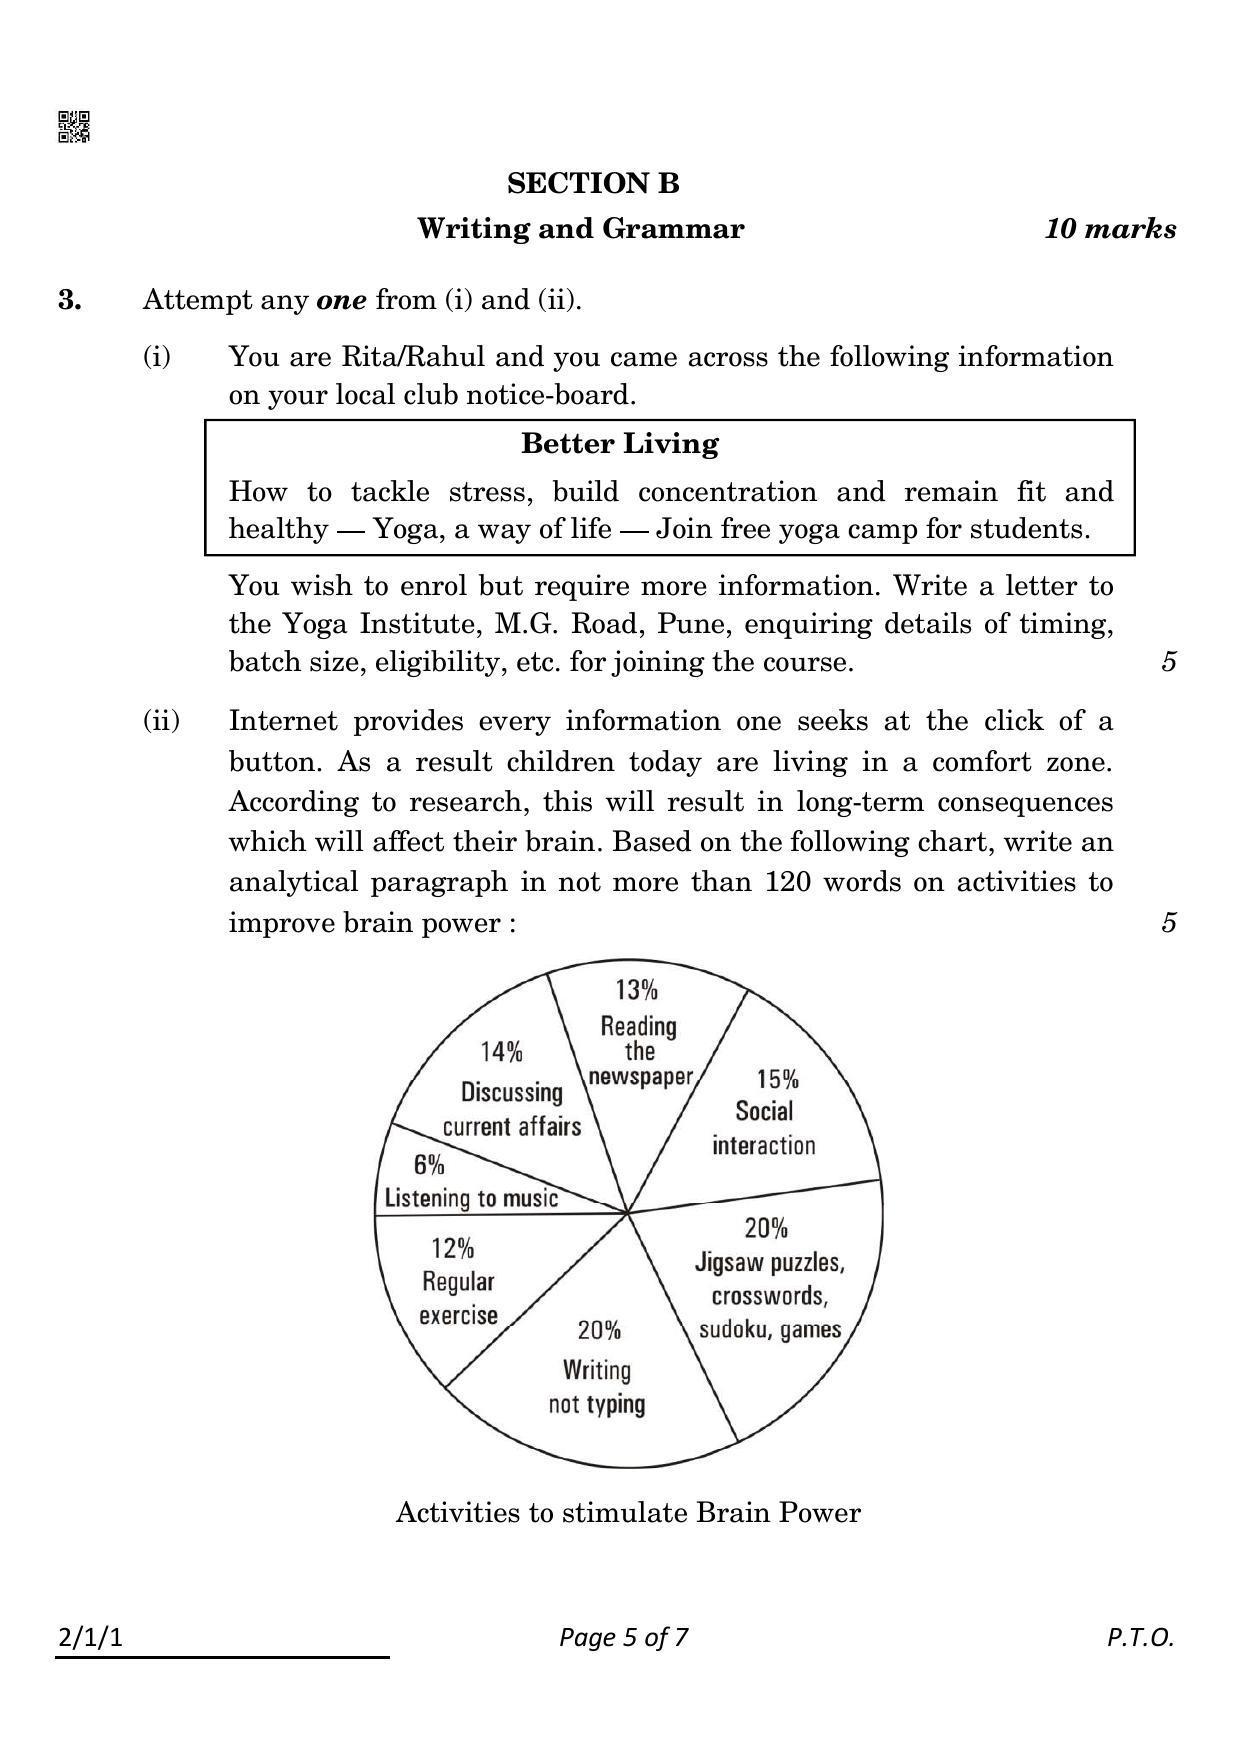 CBSE Class 10 2-1-1 English L & L 2022 Question Paper - Page 5